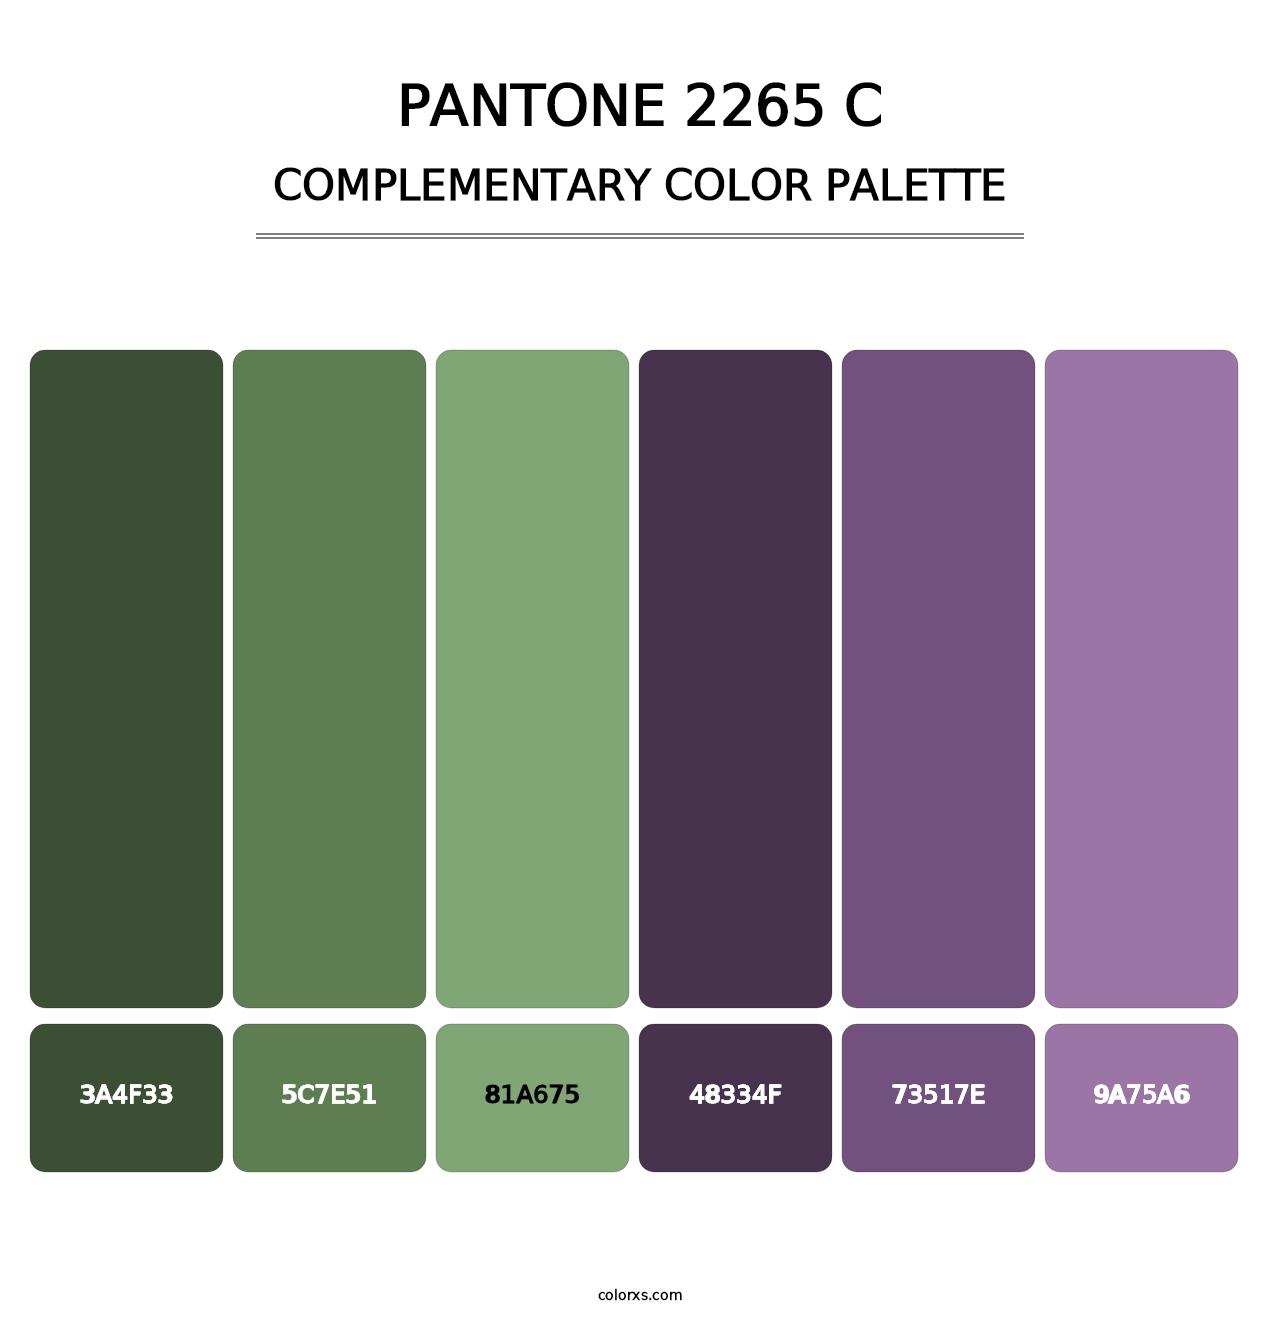 PANTONE 2265 C - Complementary Color Palette